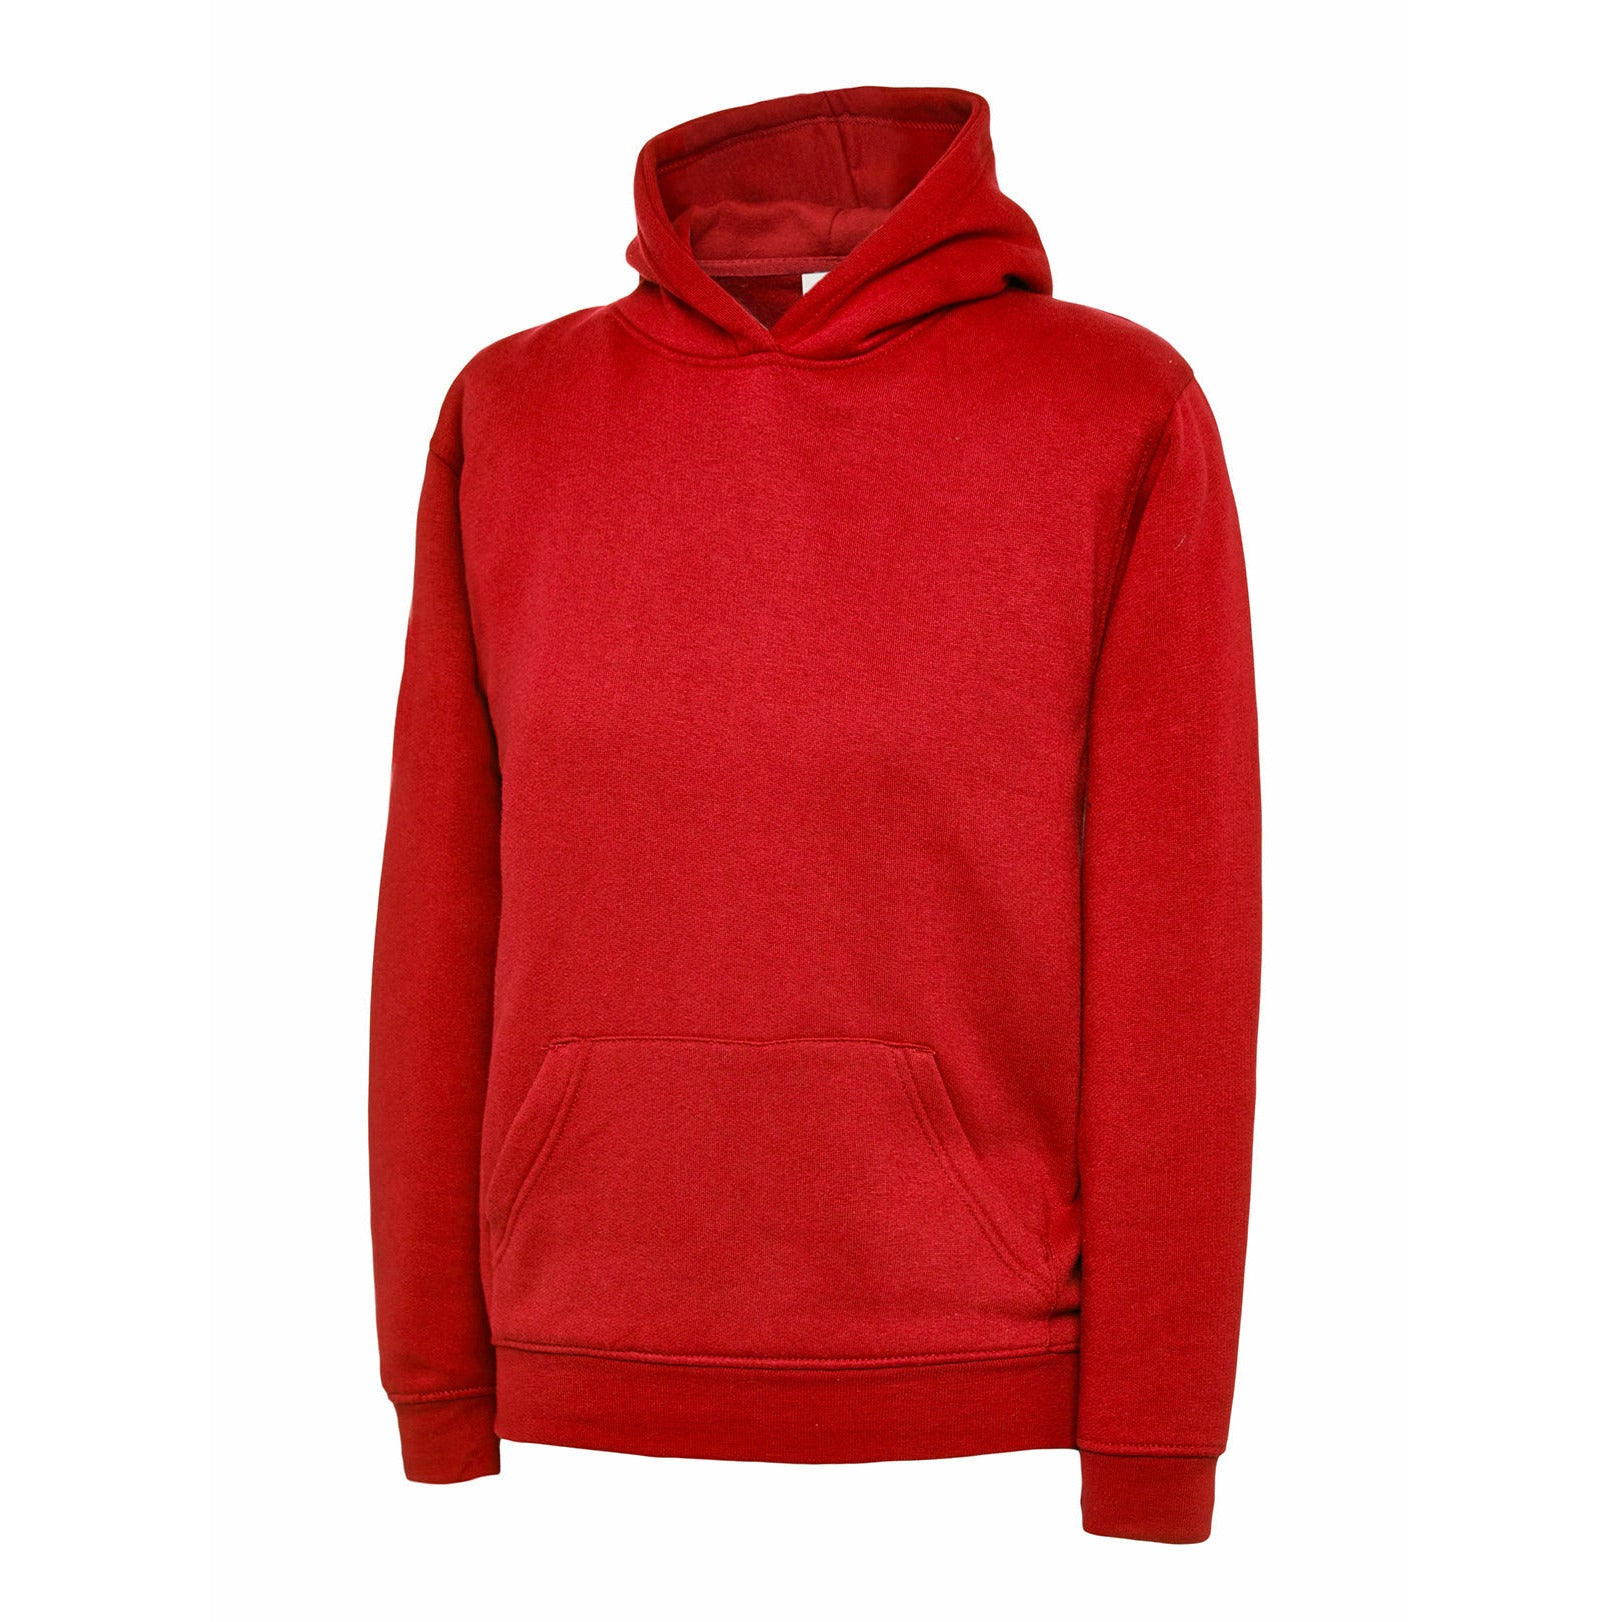 Childrens Hooded Sweatshirt (2 - 4 YRS) Red